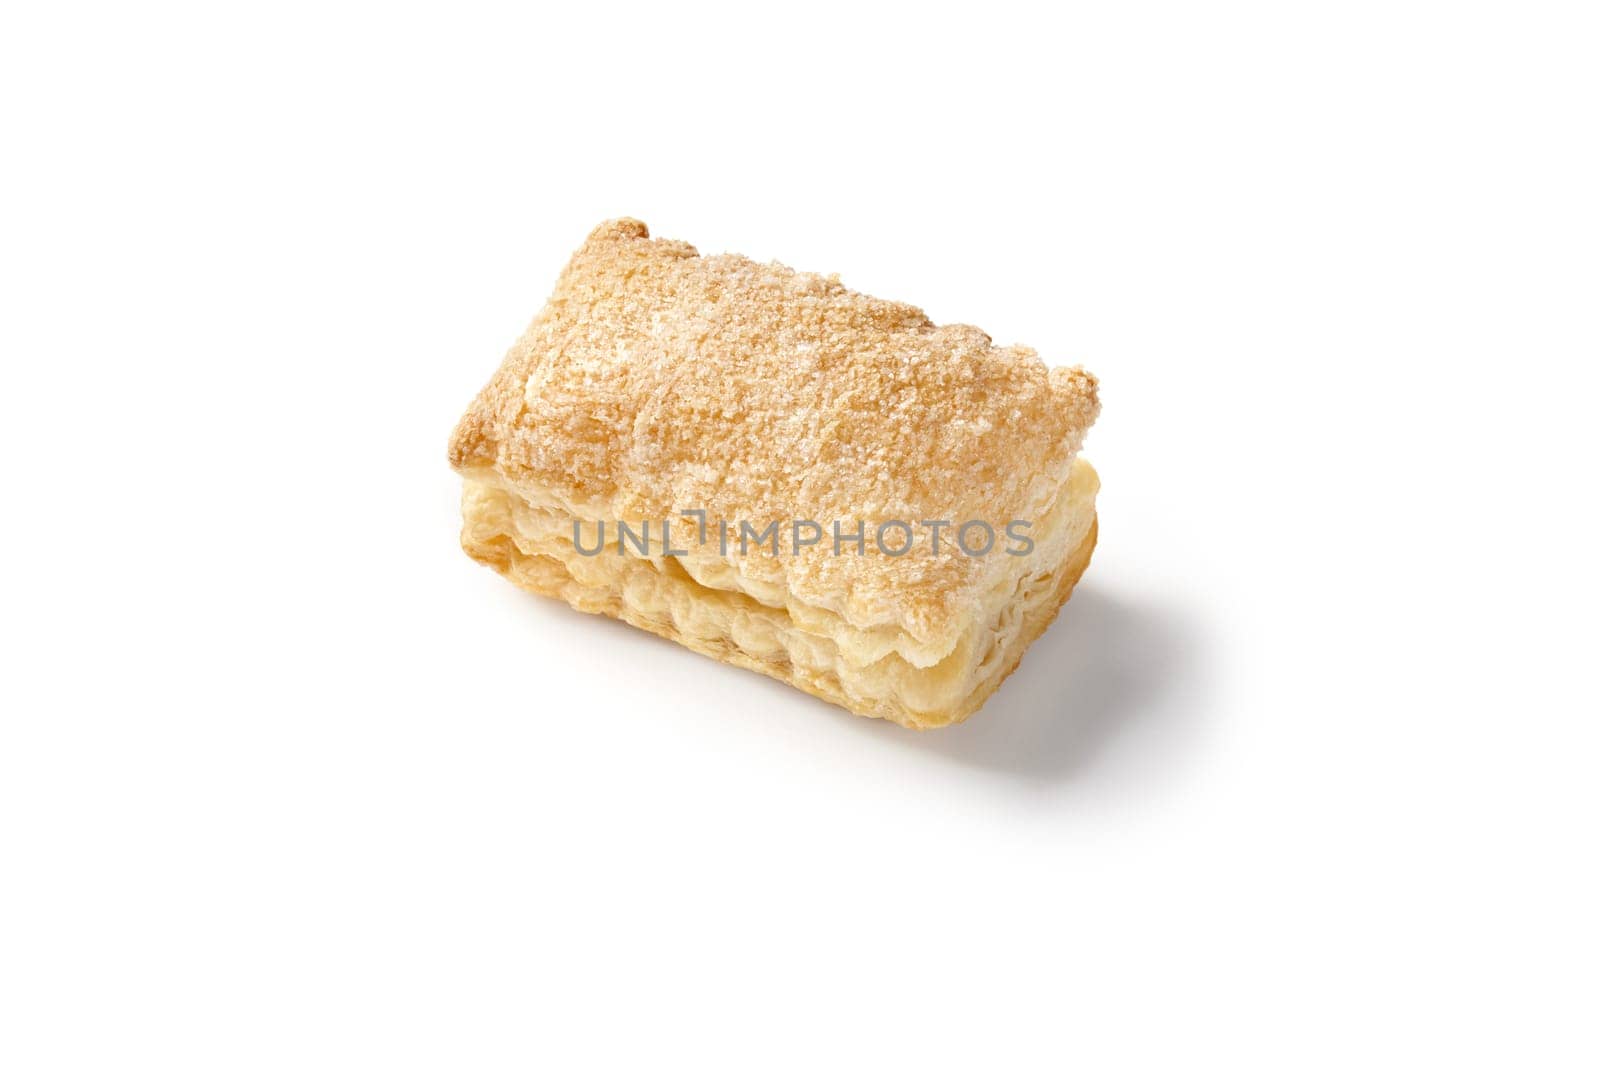 Crispy cream puff pastry sprinkled with sugar on white background by nazarovsergey